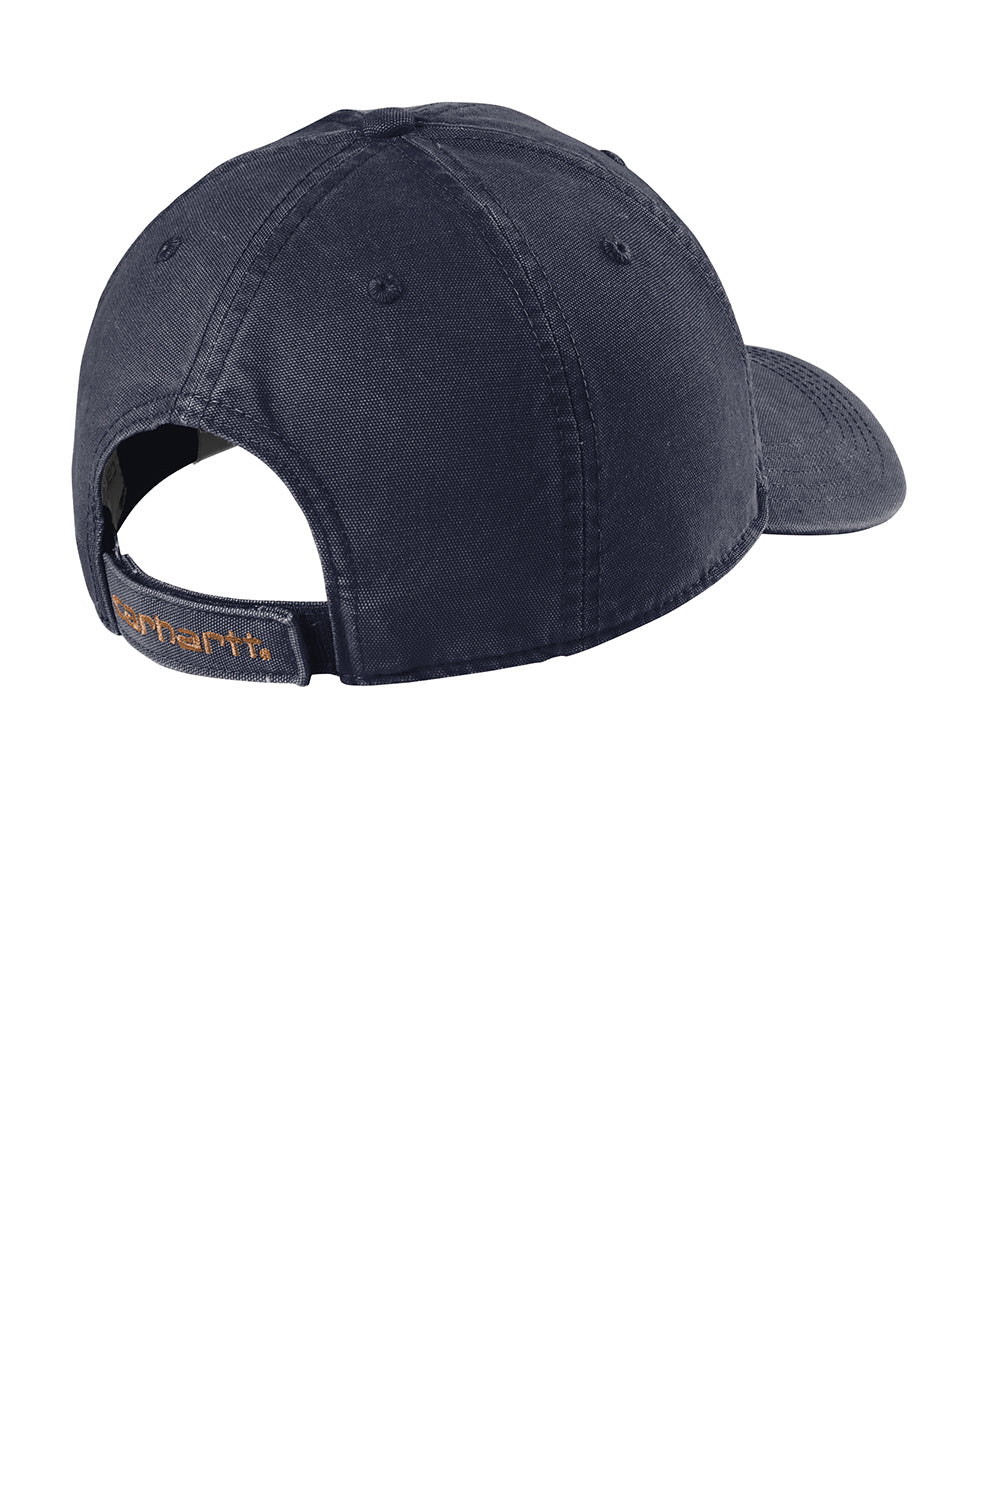 Carhartt CT103938  Moisture Wicking Canvas Adjustable Hat Navy Blue Flat Back